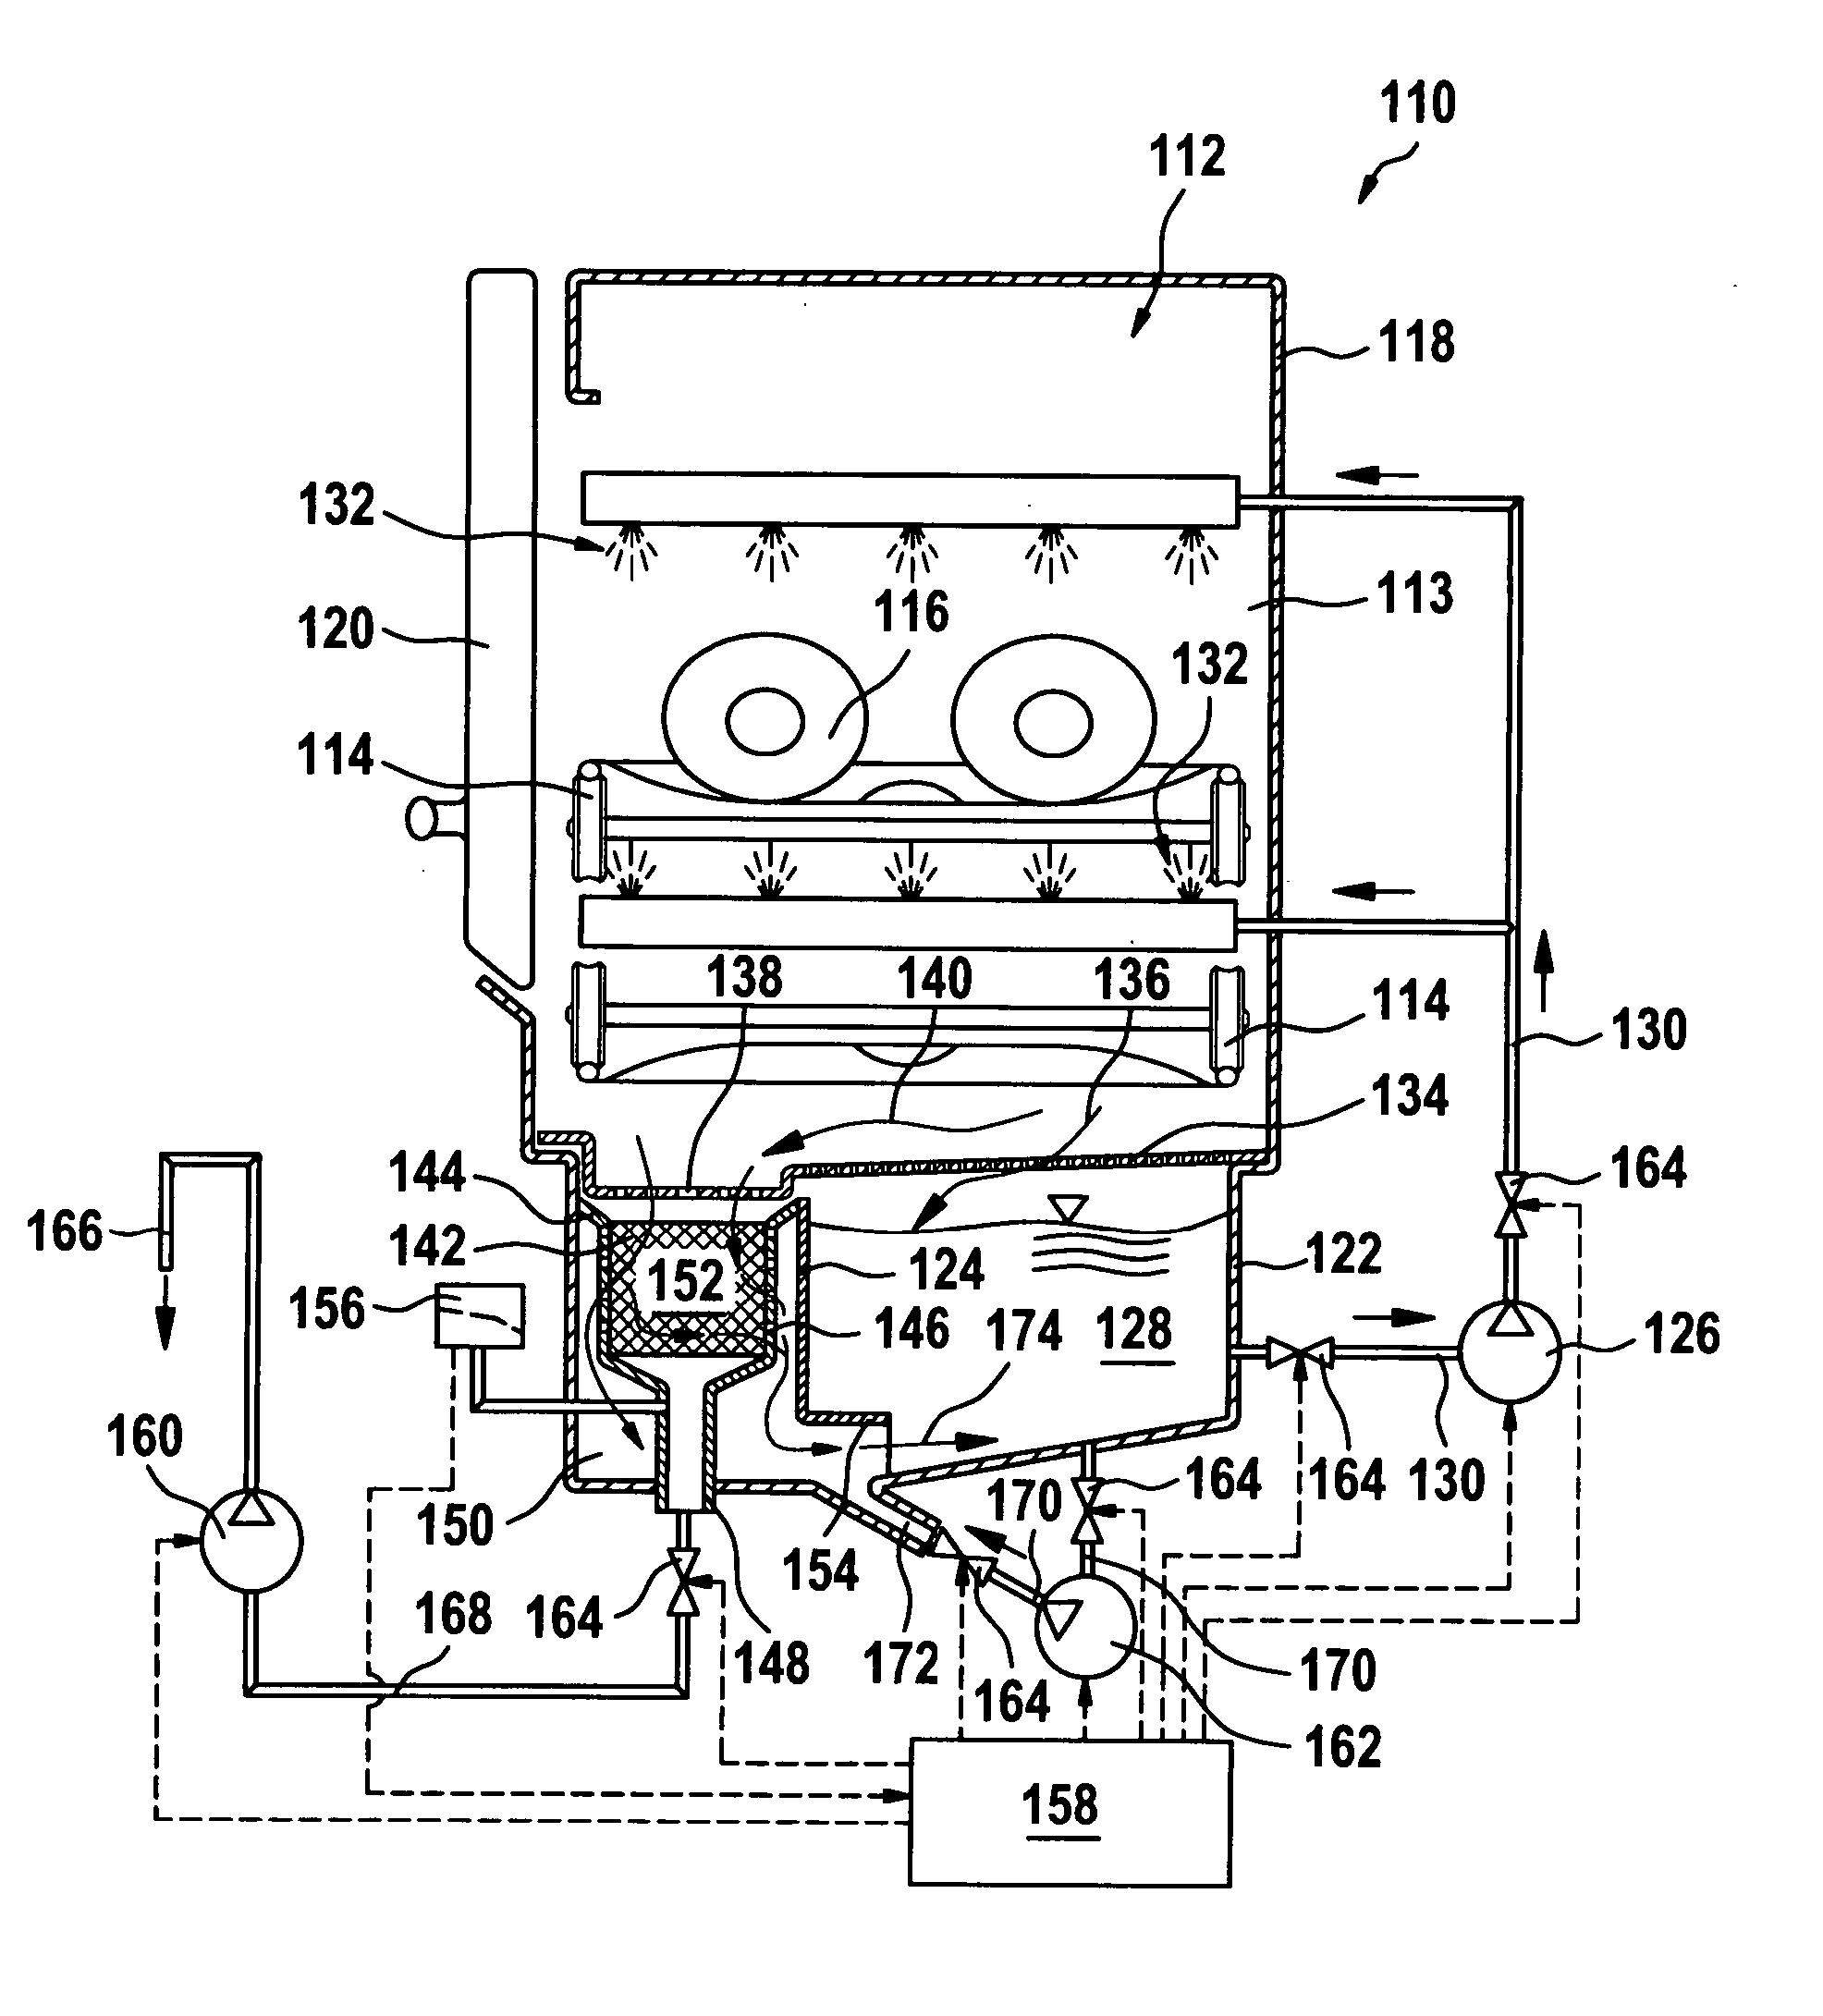 Multi-tank dishwasher comprising a backwash device